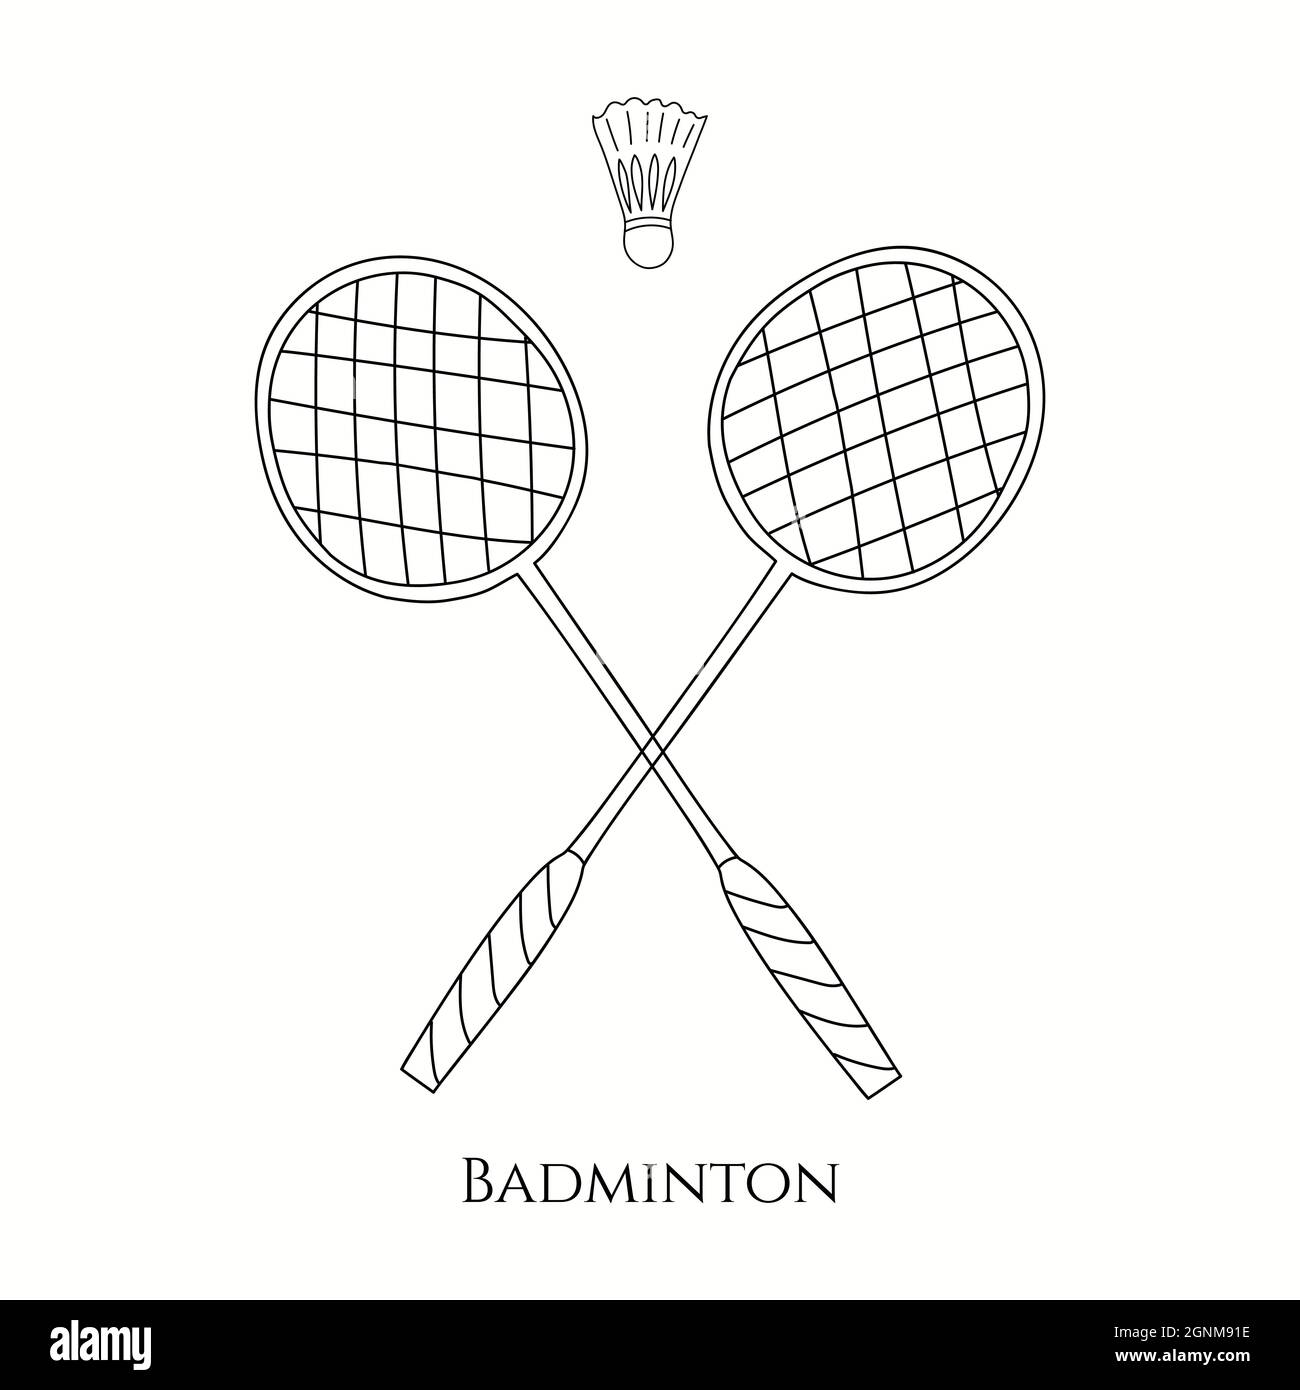 Badminton Sketch Background by macrovector | GraphicRiver